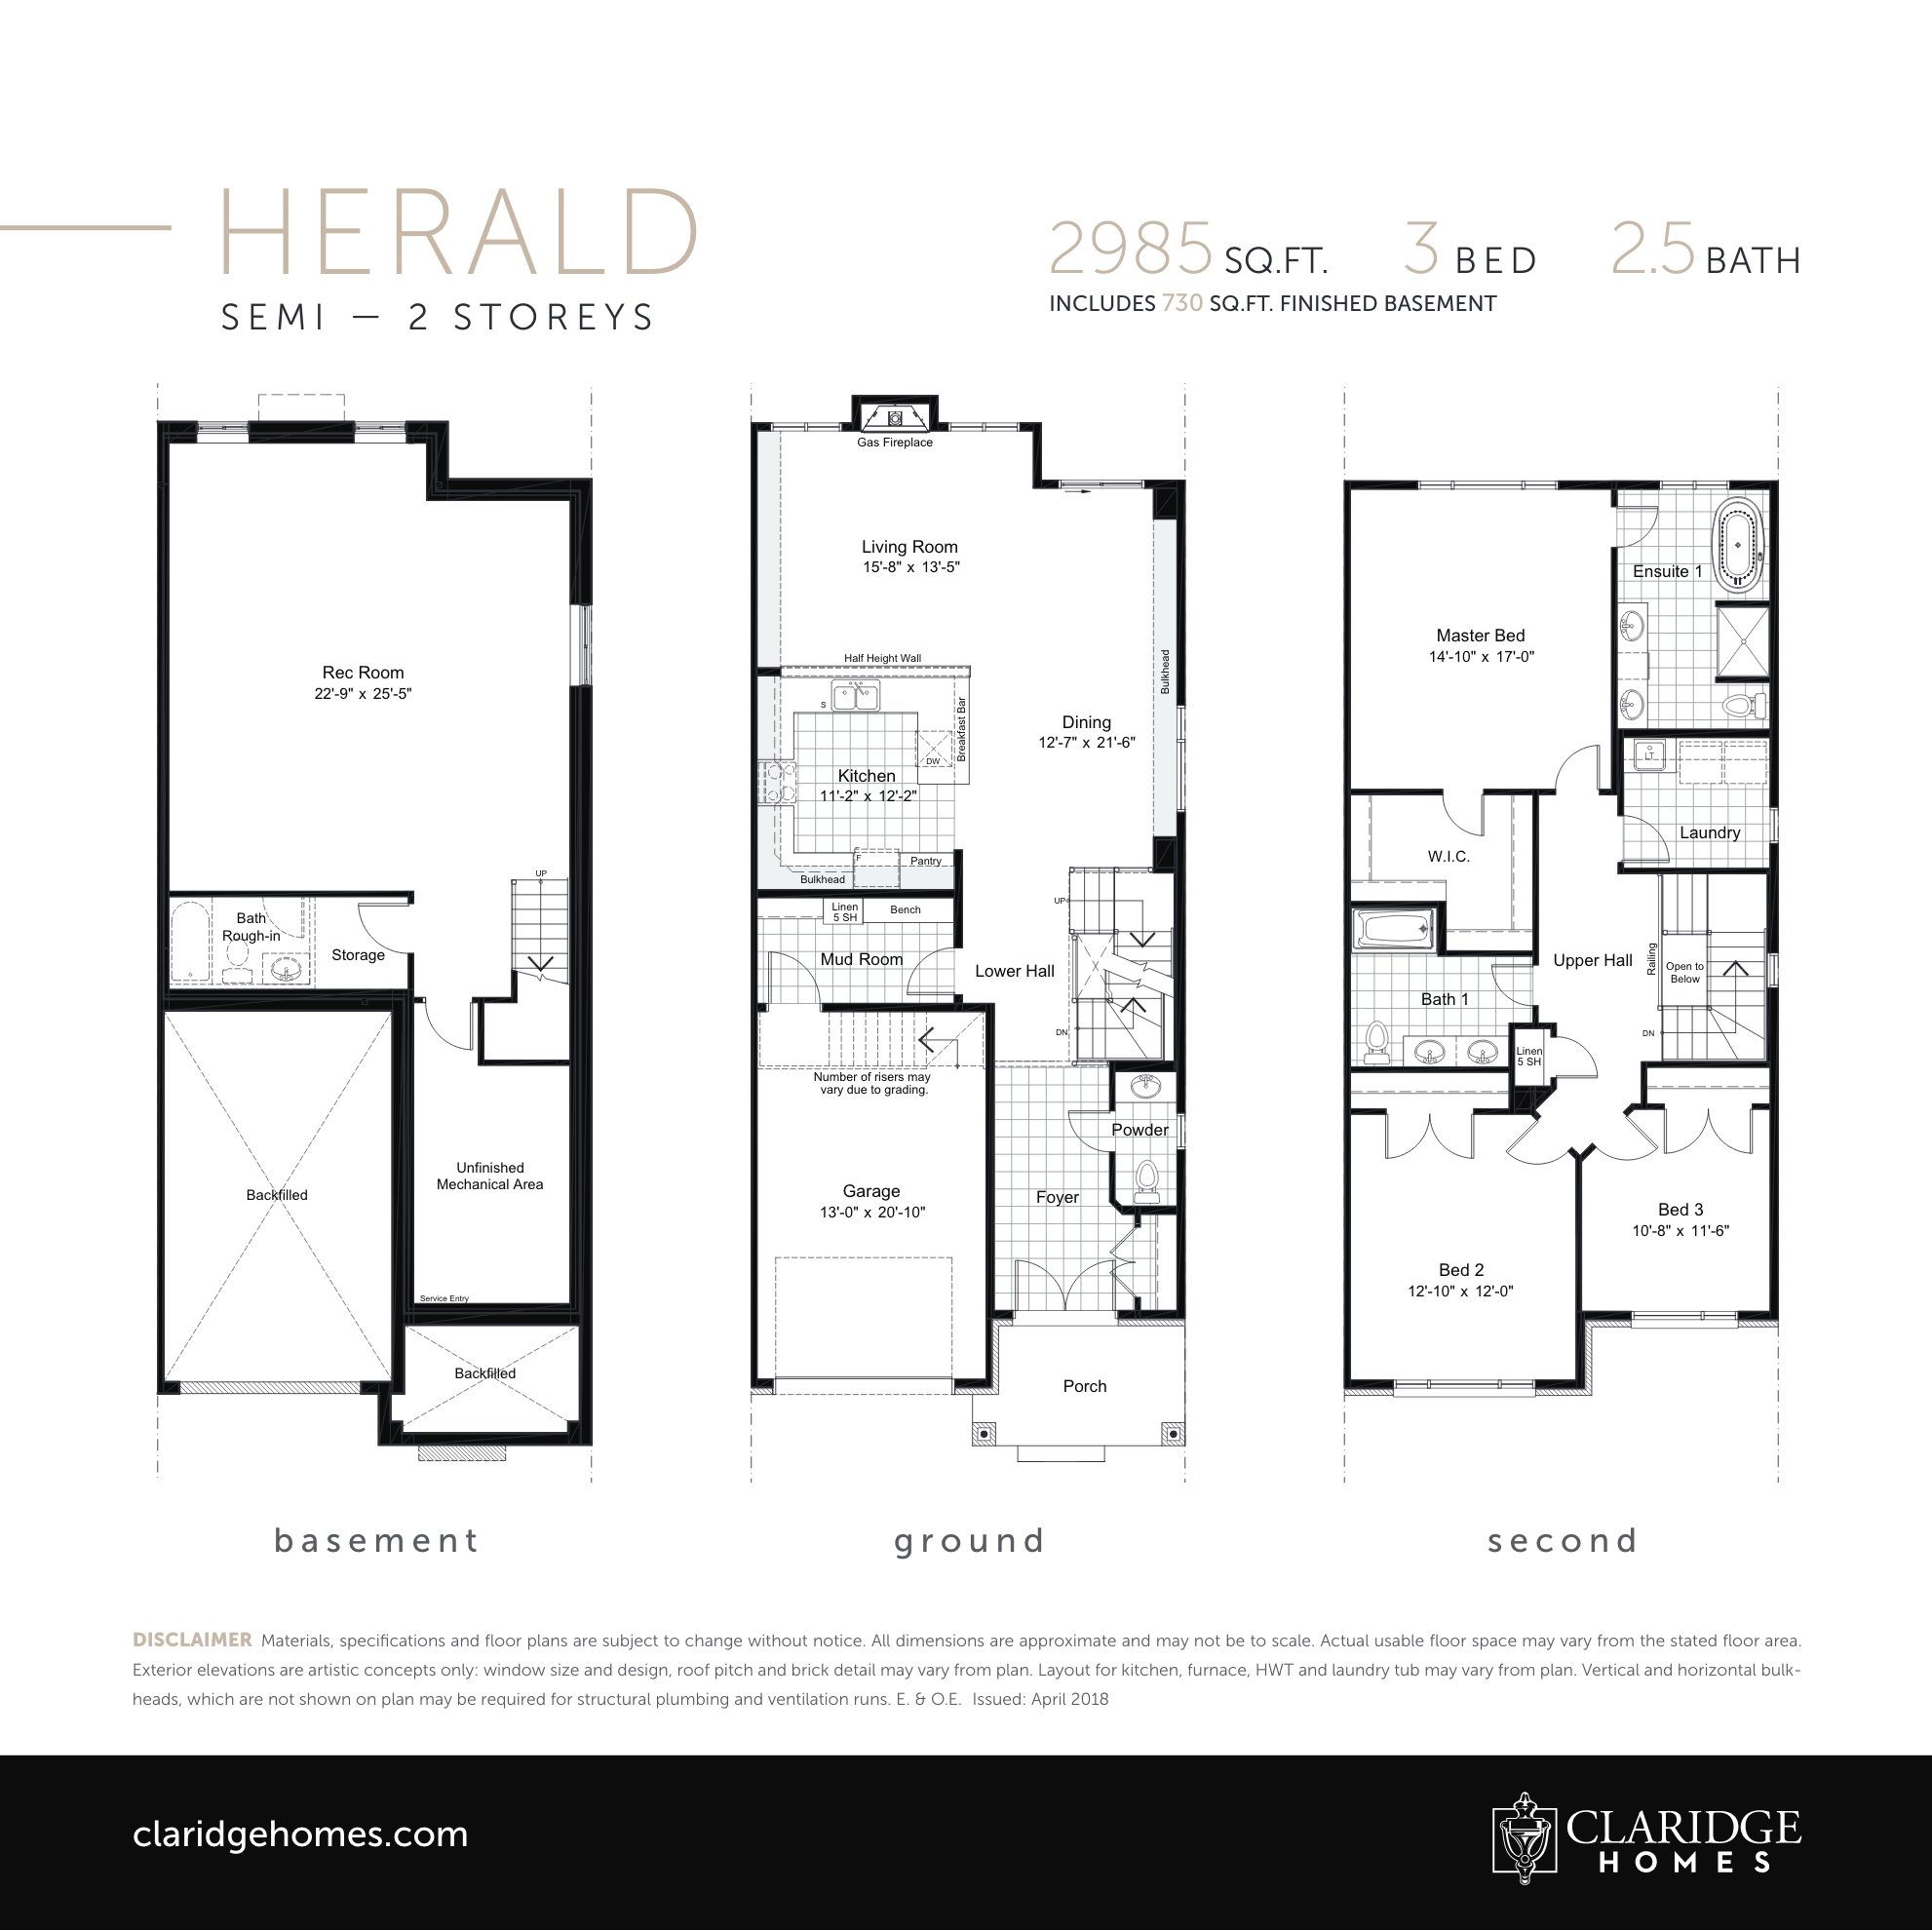 Herald Floor Plan of River's Edge Claridge Homes with undefined beds